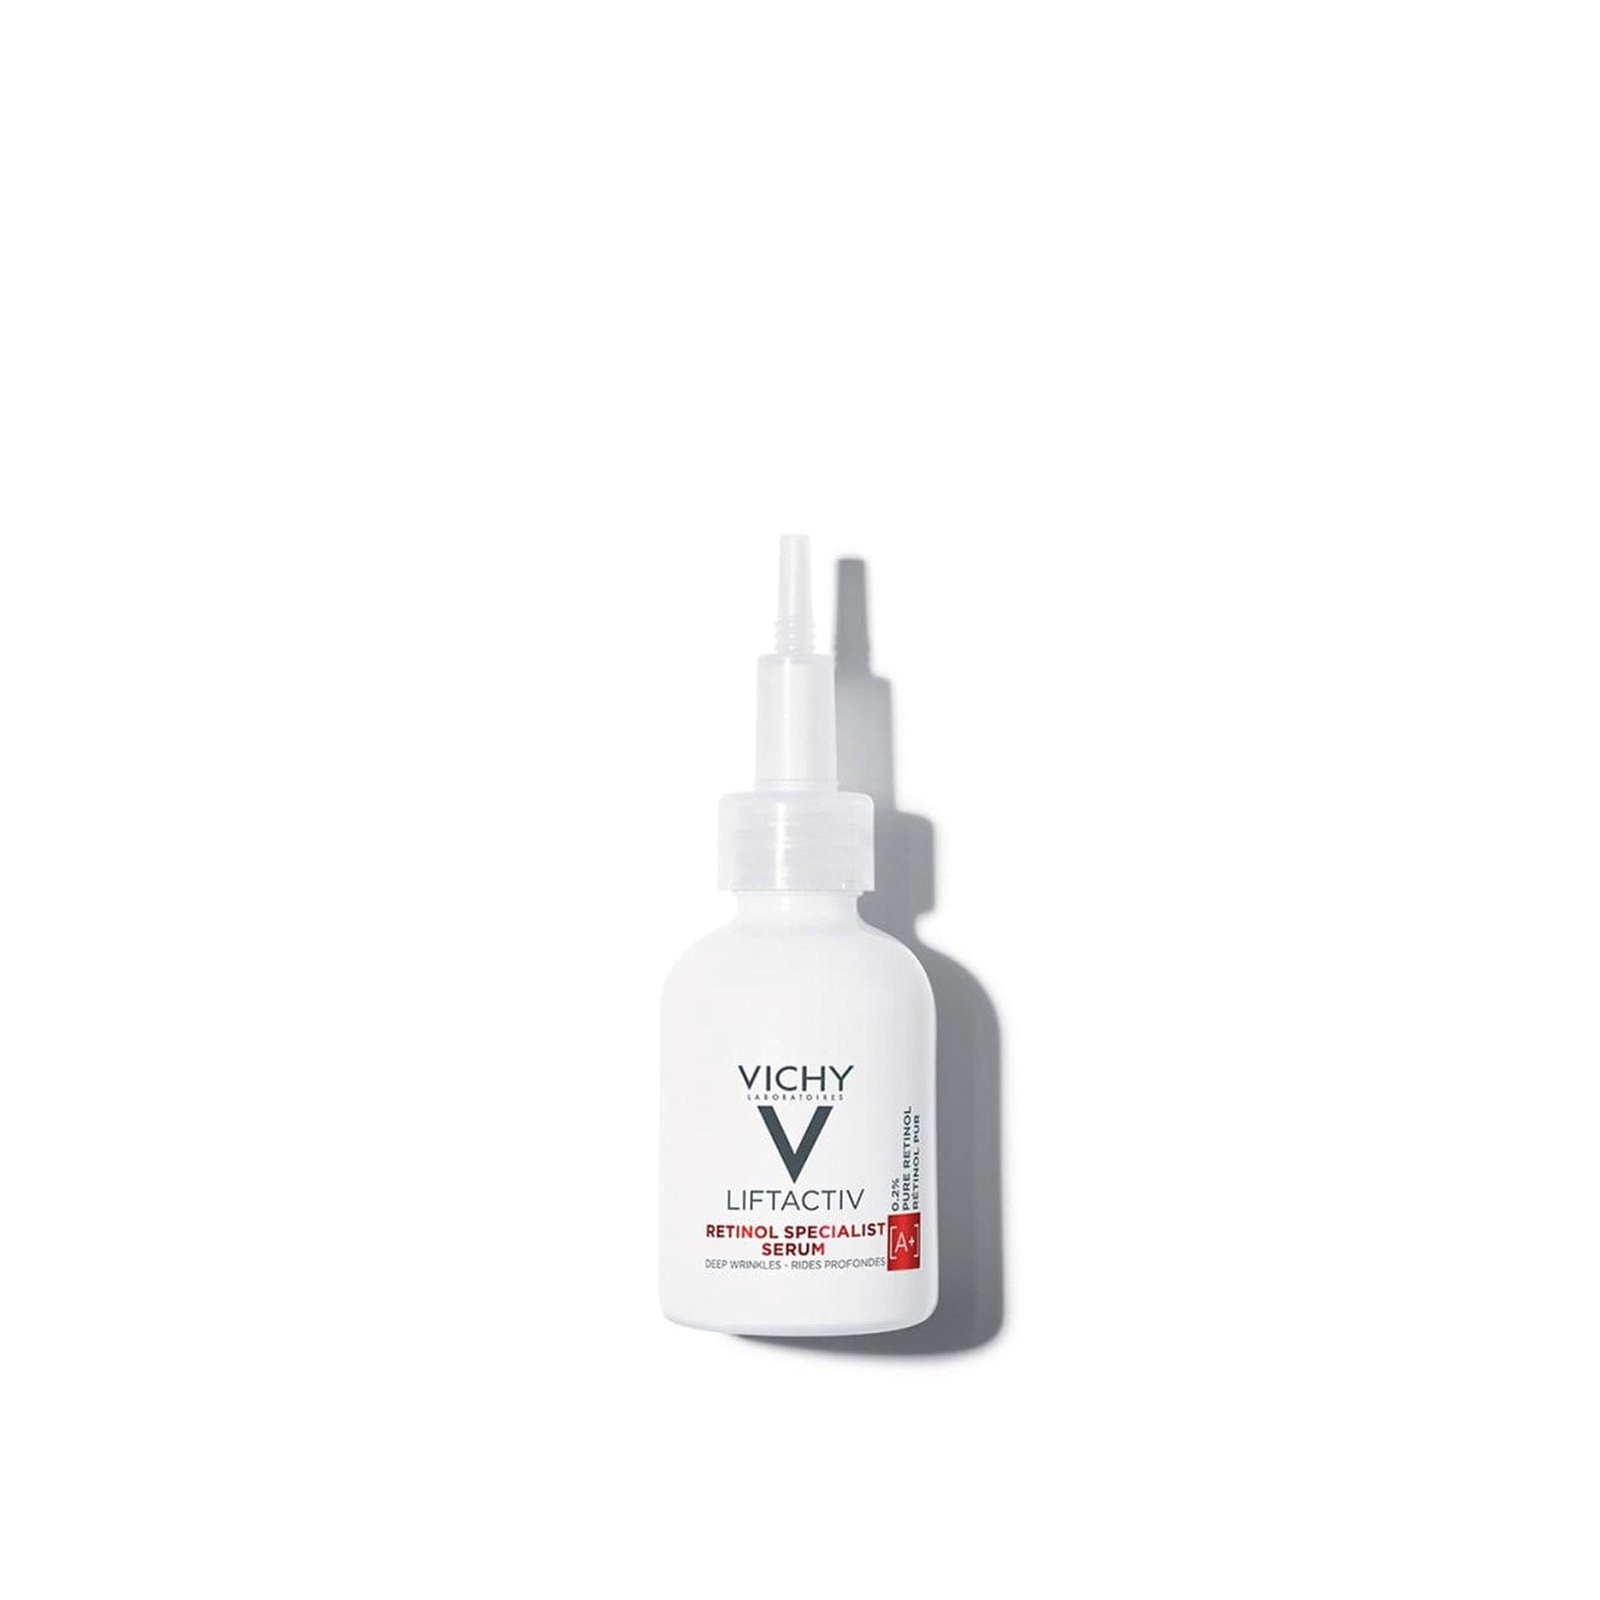 Vichy Liftactiv [ A+] Retinol Specialist Deep Wrinkles Serum 30ml